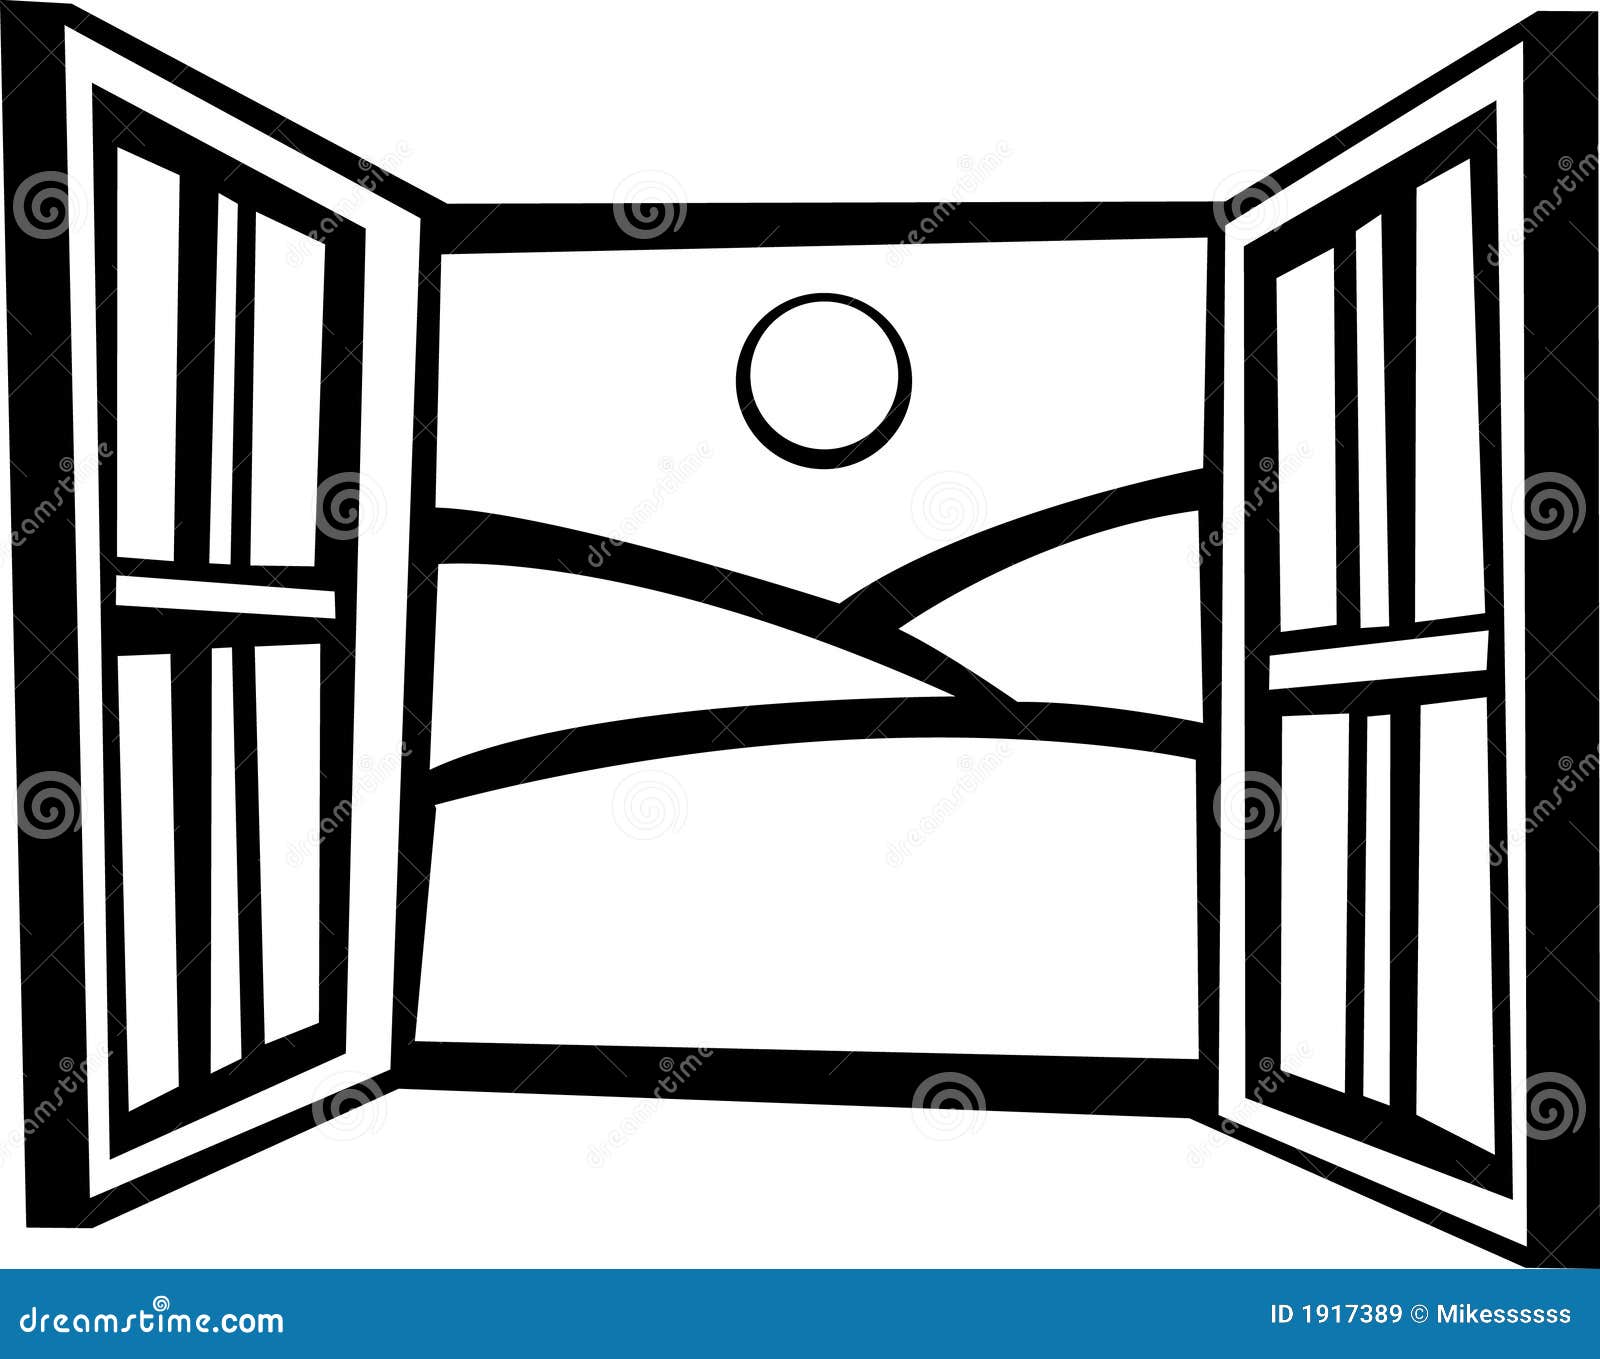 windows clip art animation - photo #34